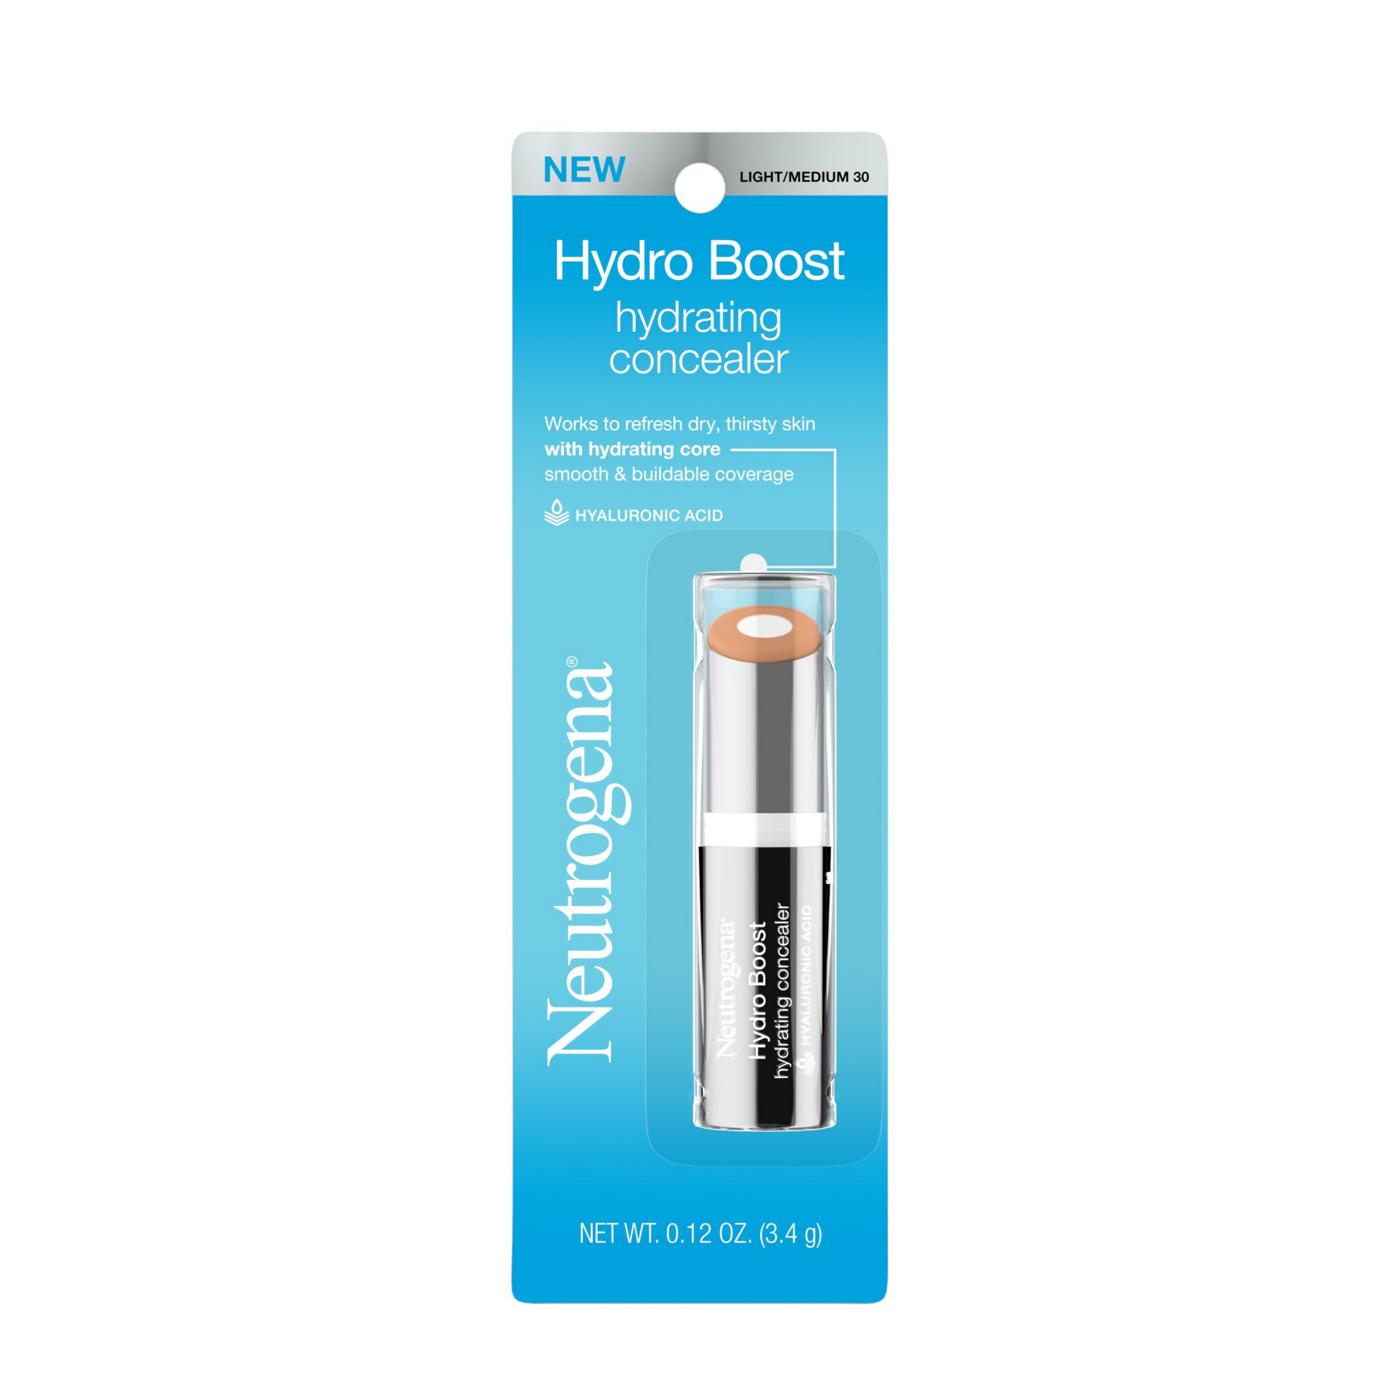 Neutrogena Hydro Boost Hydrating Concealer 30 Light/Medium; image 1 of 6